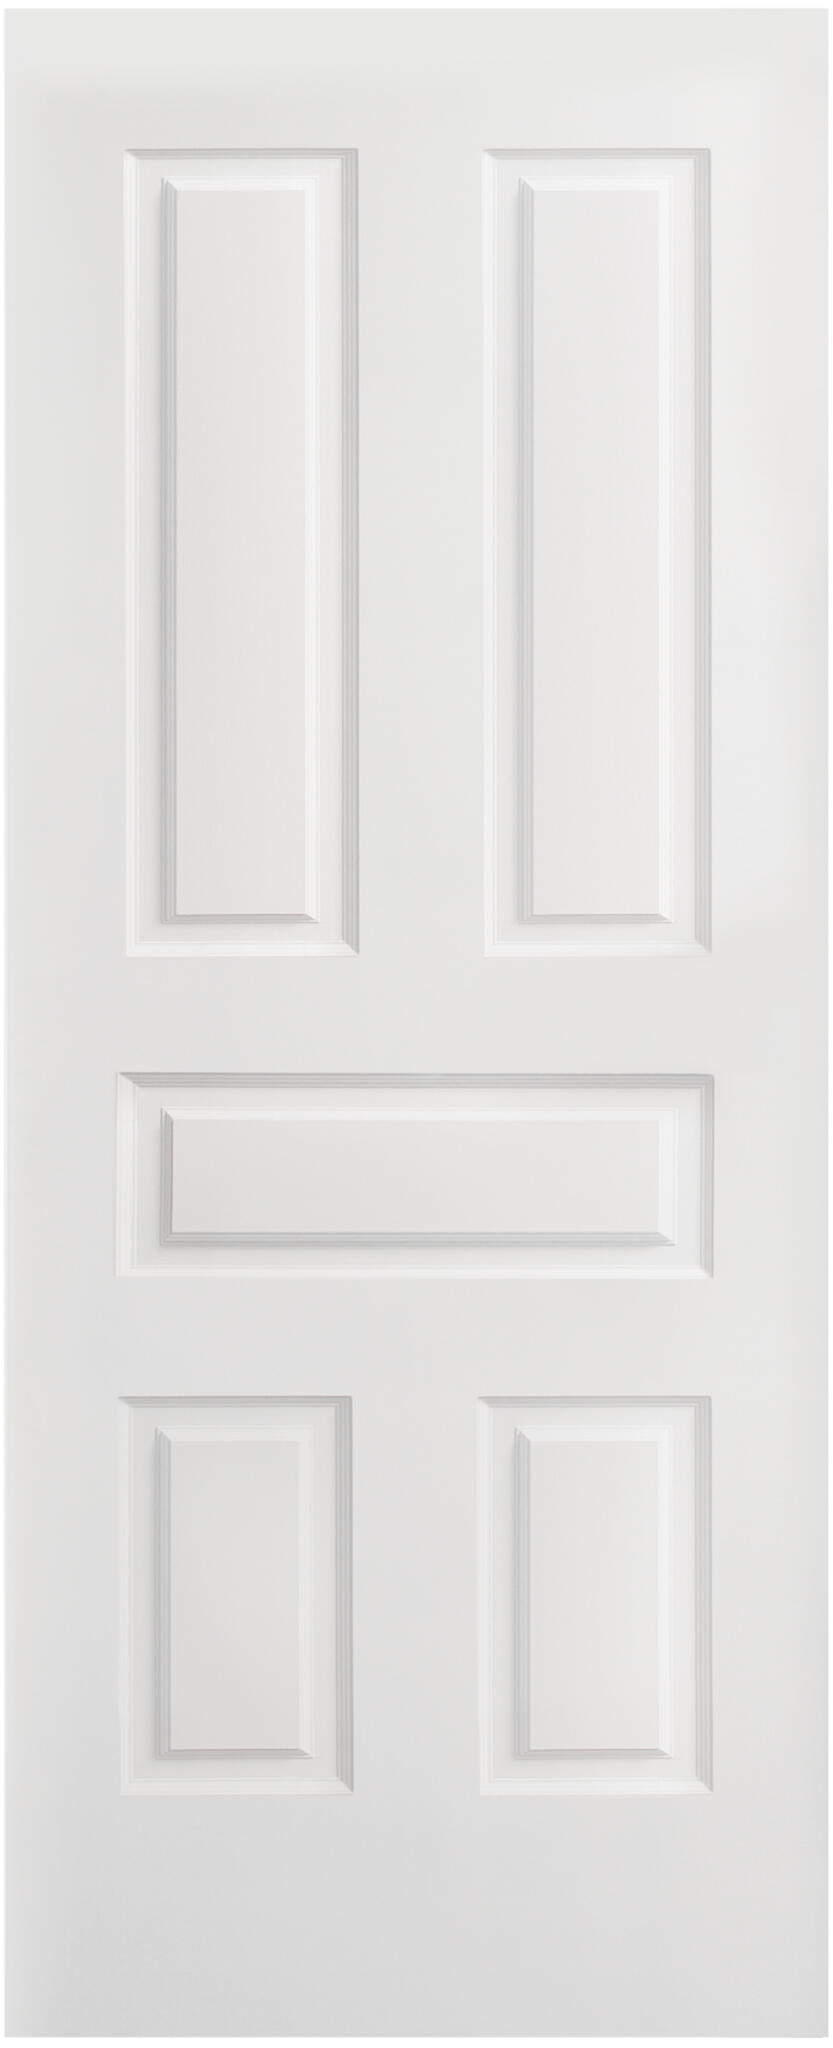 Panel de puerta blindada indiana de 83.5x204 cm de la marca Sin marca